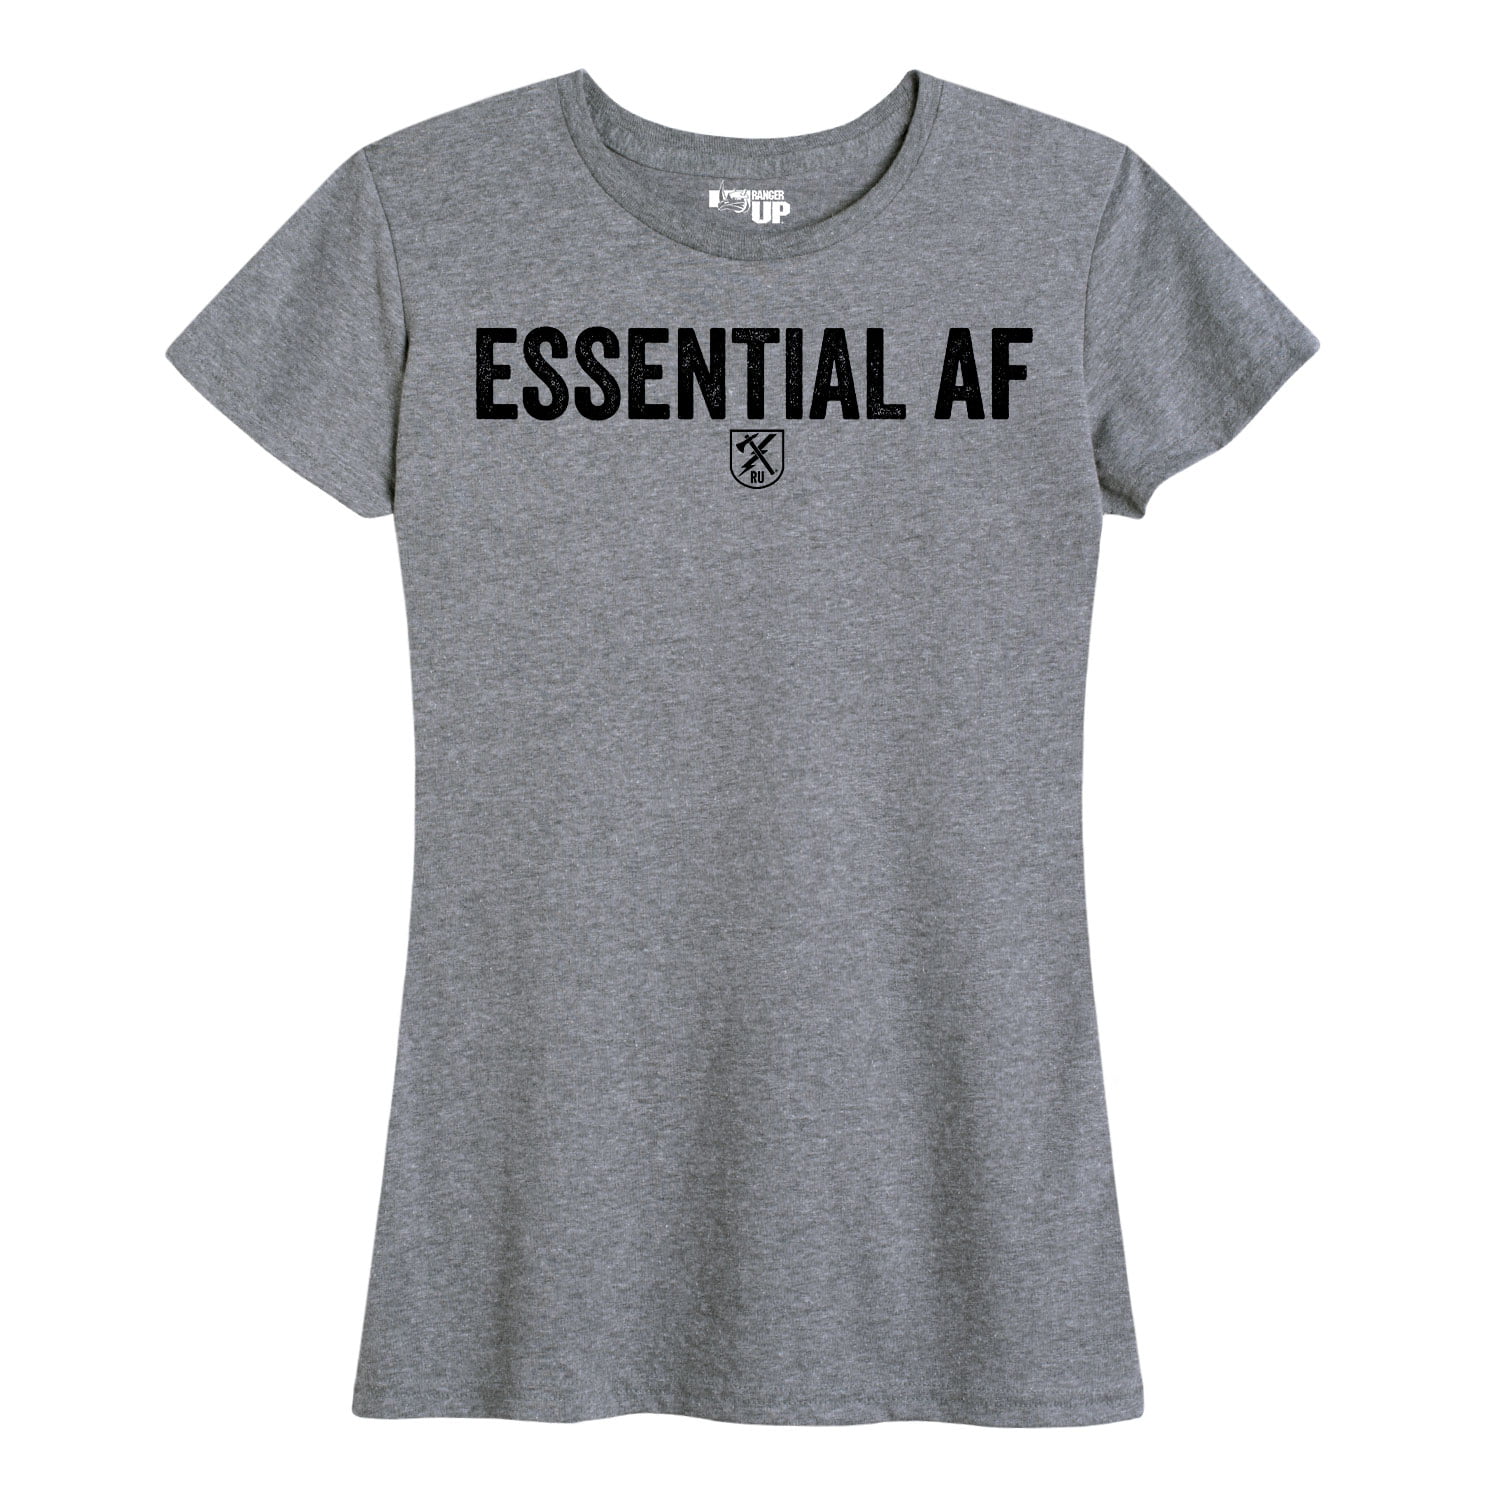 Ranger Up - Essential Af - Women's Short Sleeve Graphic T-Shirt